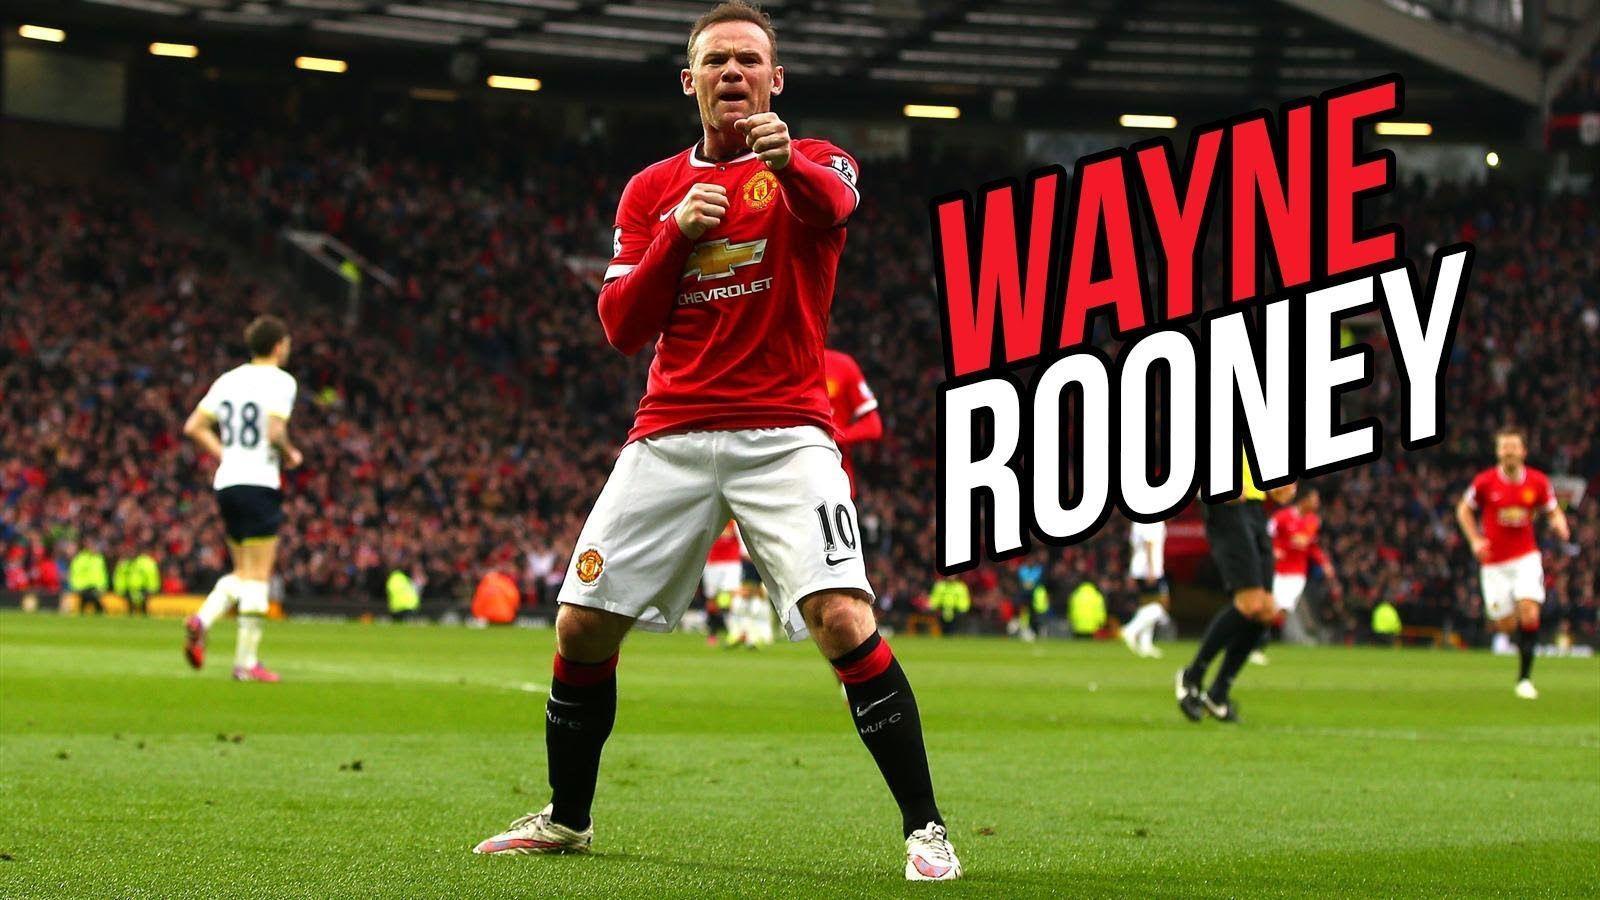 Wayne Rooney ● Best skills, goal & assists ● Manchester United